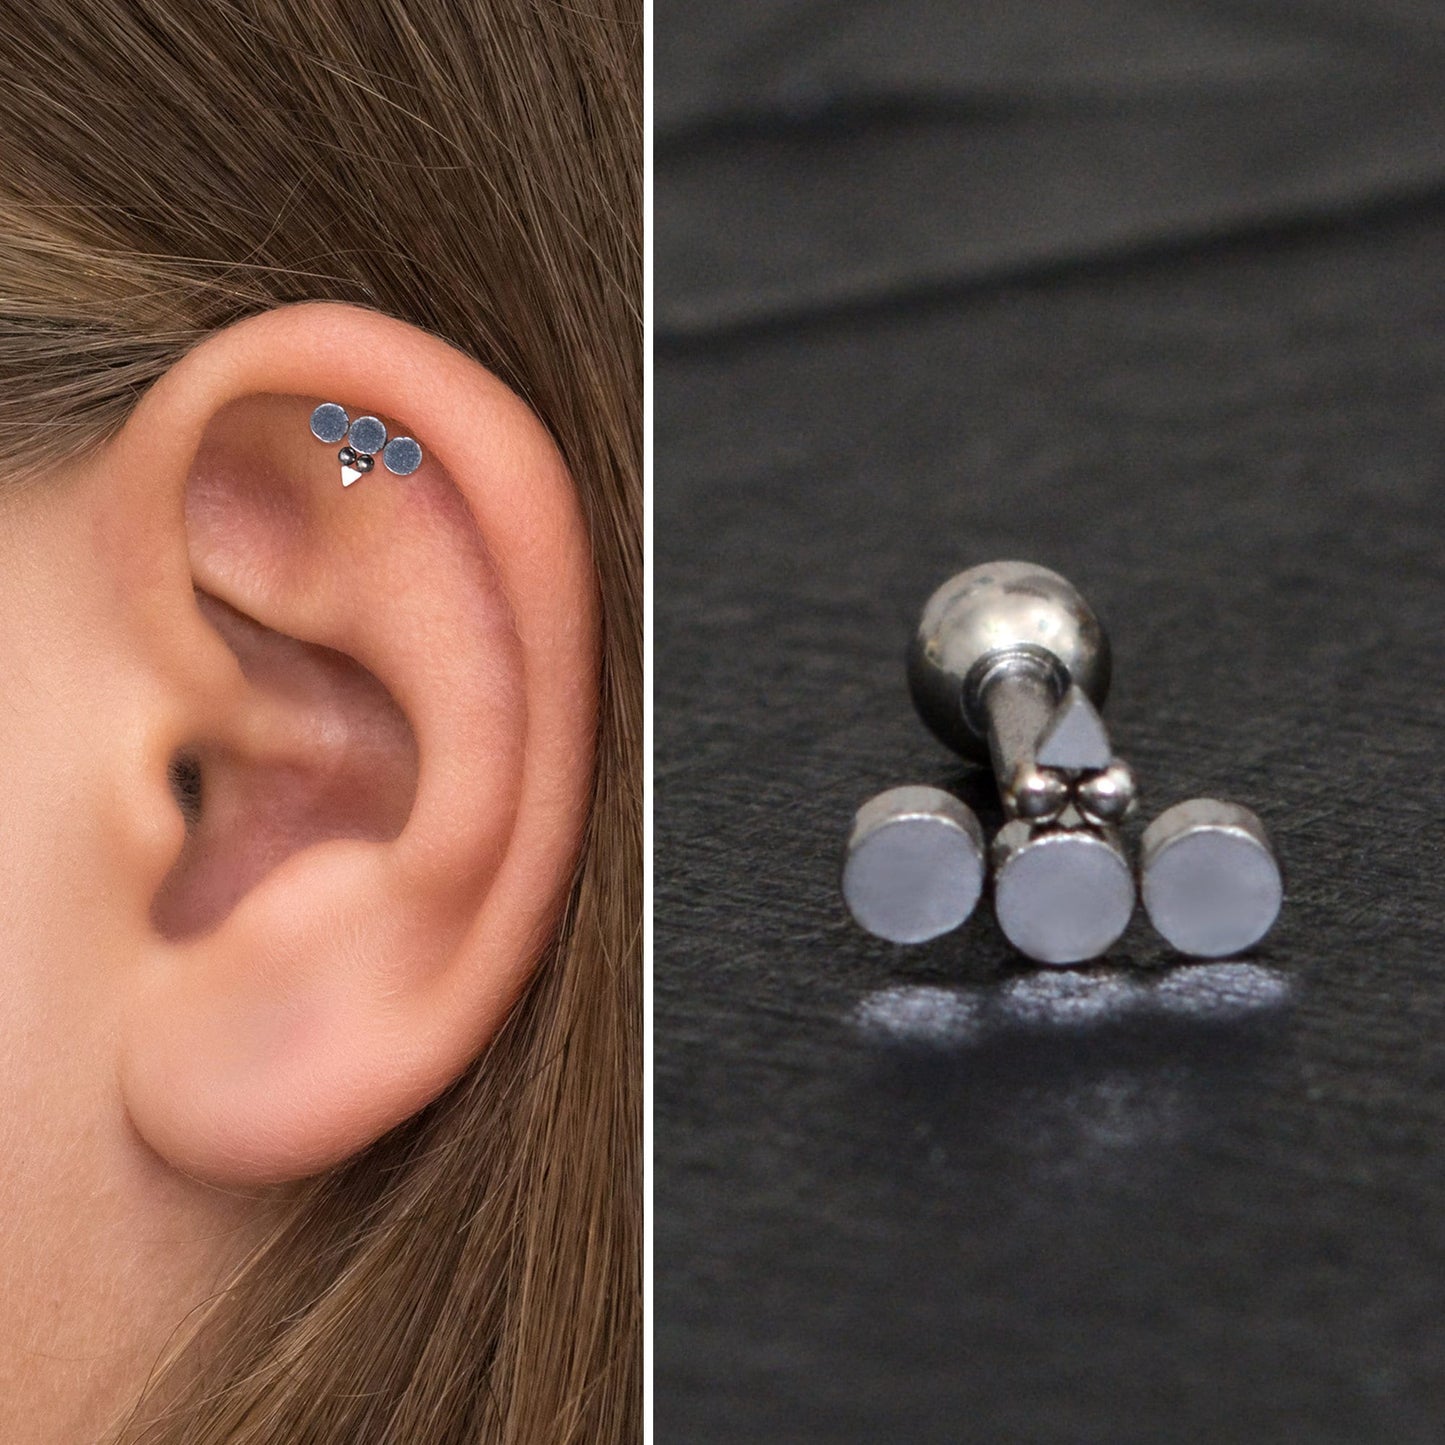 Curved Stud Earring Surgical Steel - TitaniumFashion